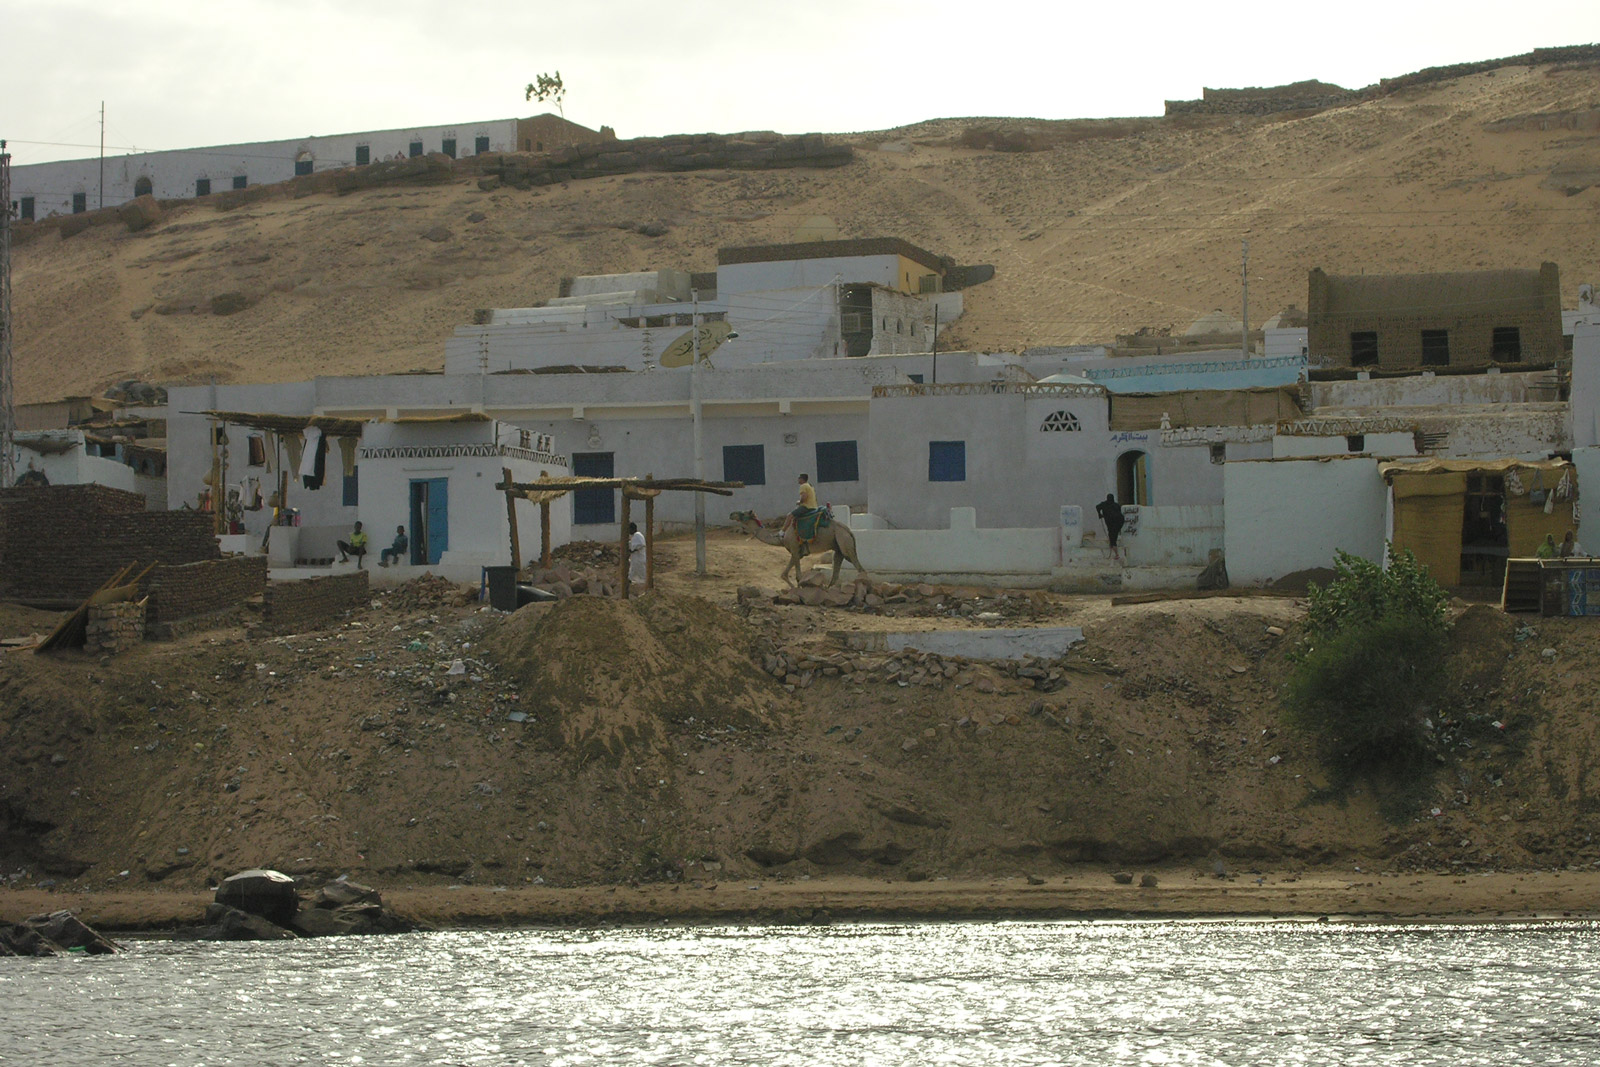 Case sul Nilo, Nubia. Photography: Antonino Cardillo, 2005